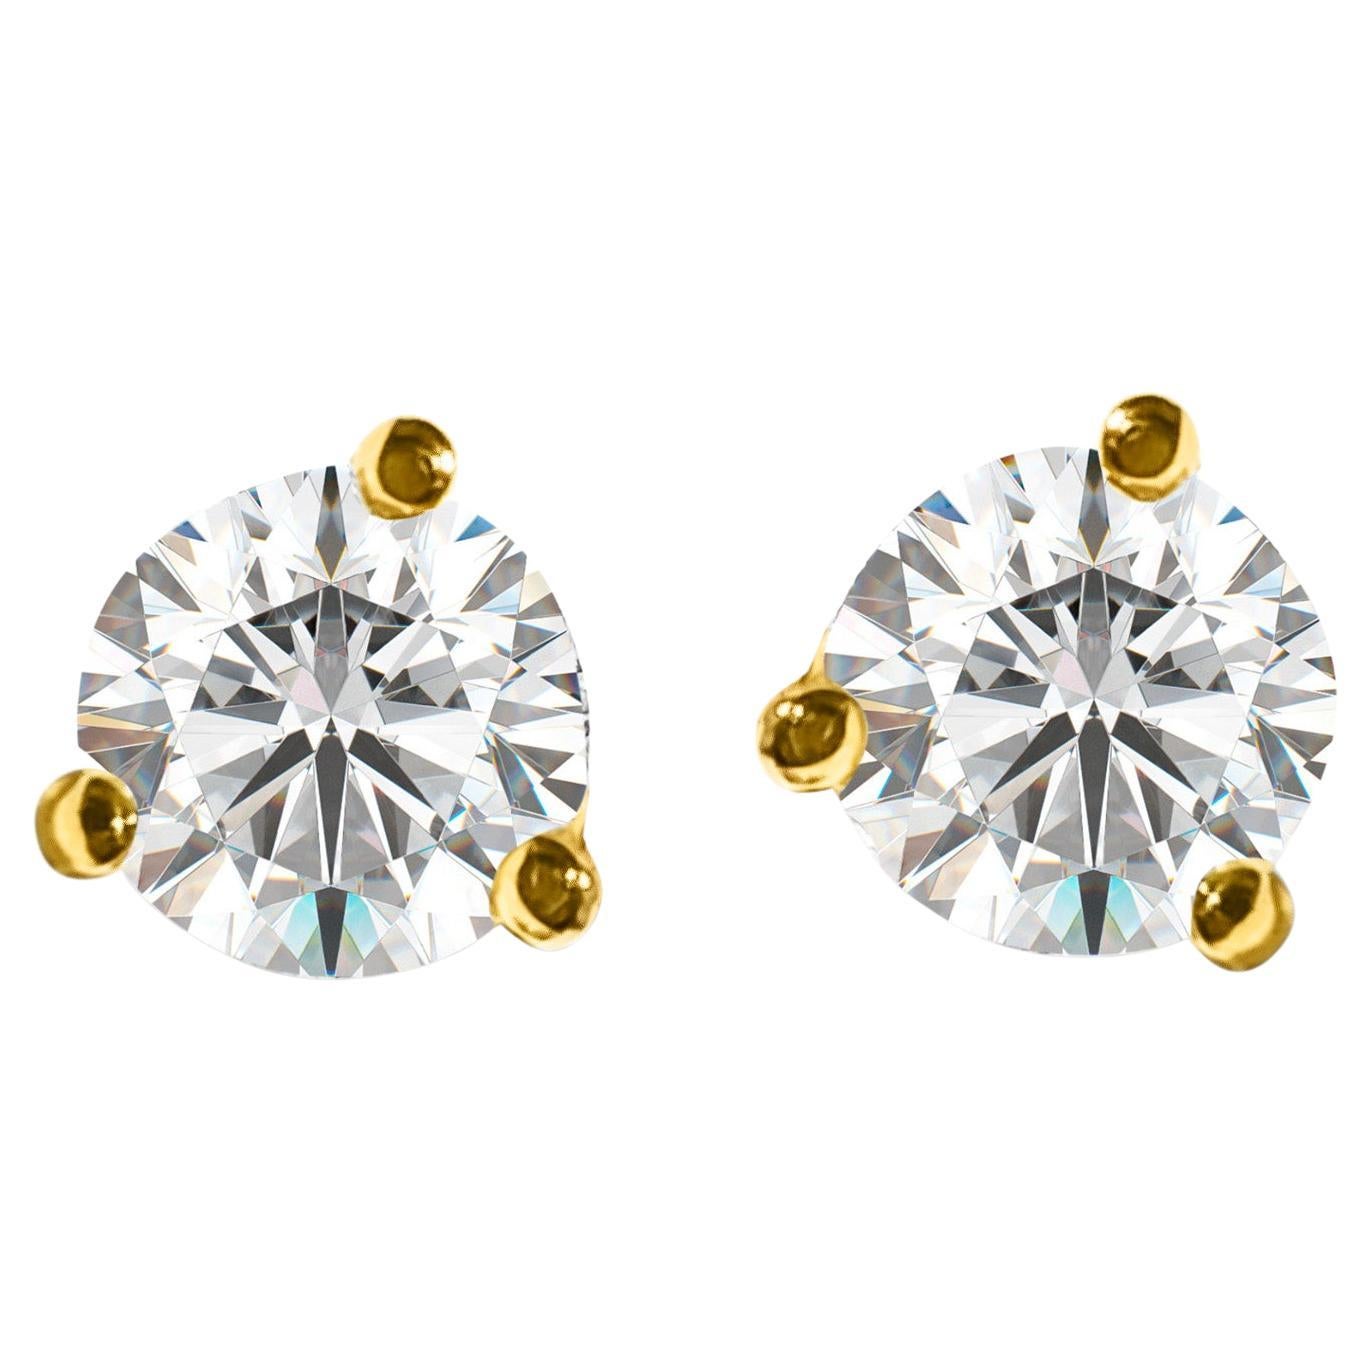 Martini Style 1.20 Carat VVS Diamond Stud Earrings in 14k Gold For Sale